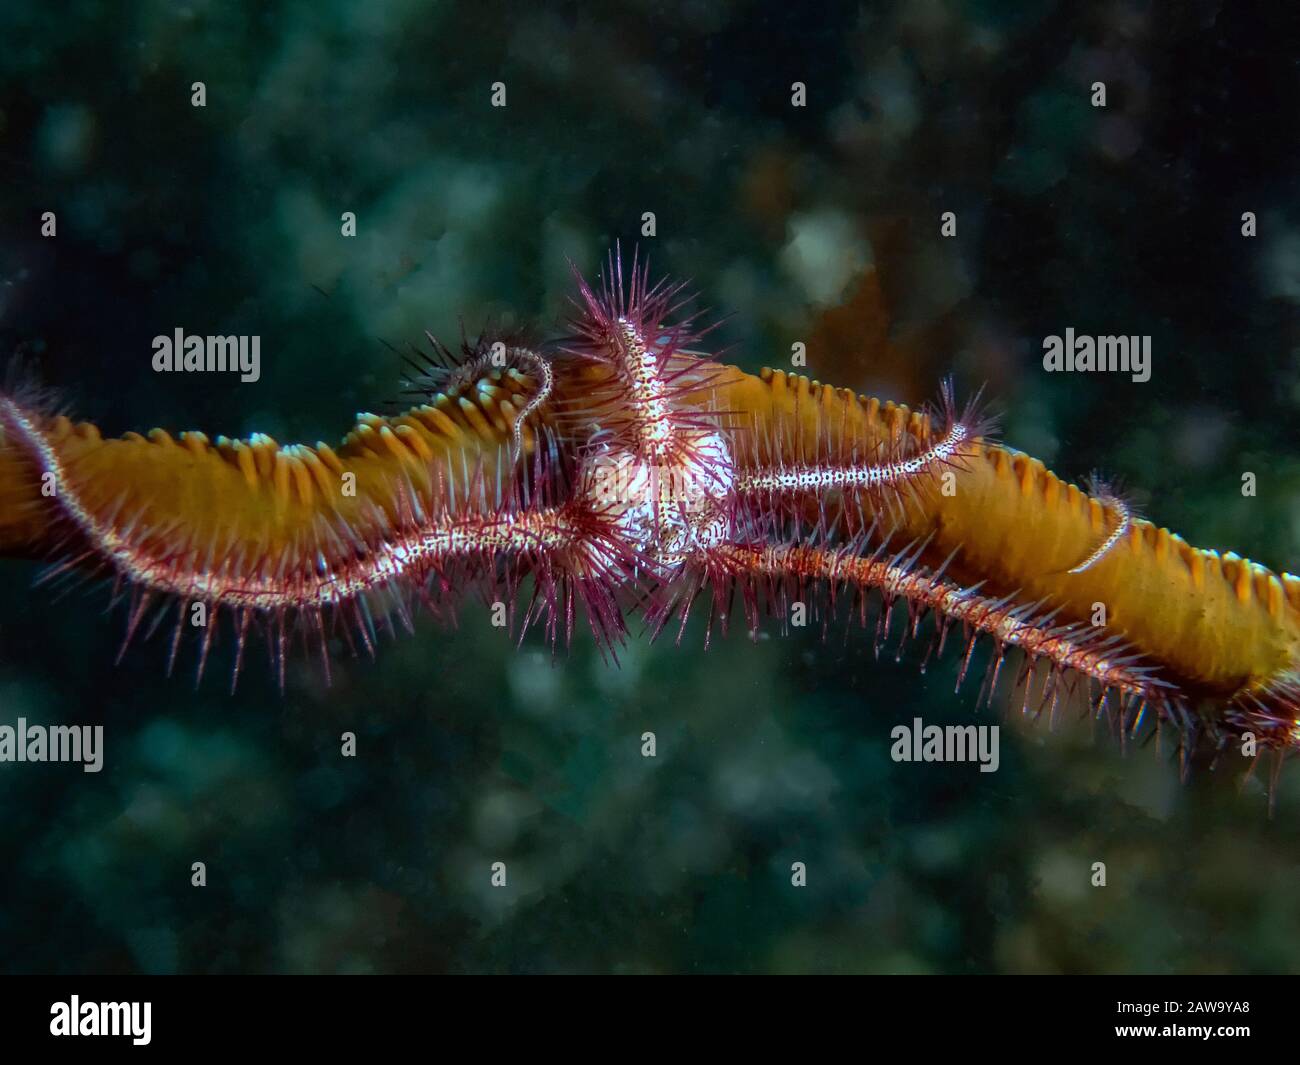 A Brittle Sea Star (Ophiuroidea sp.) Stock Photo